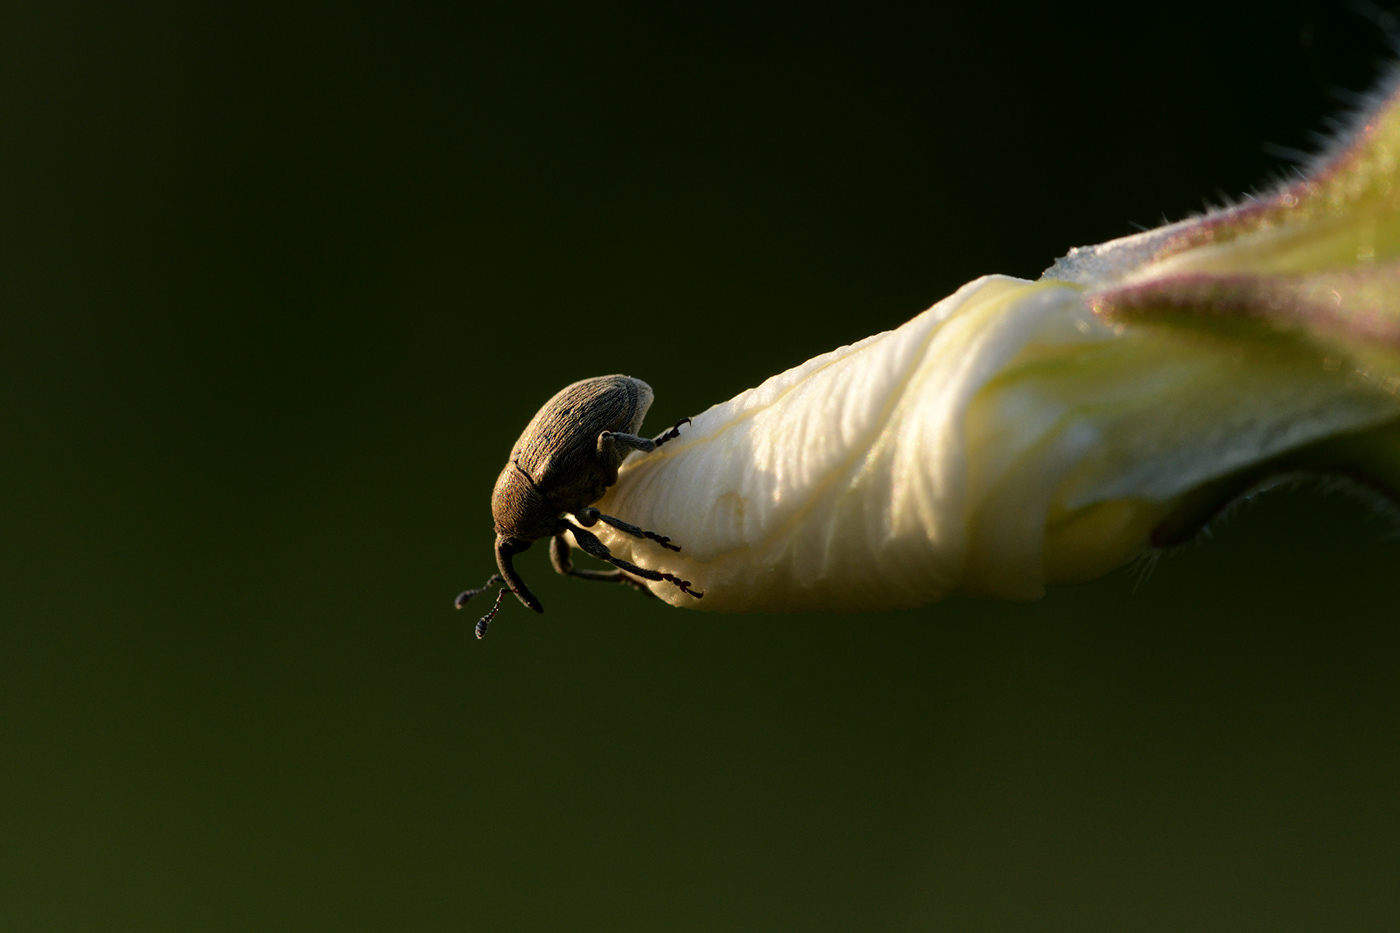 macro insect animal spider closeup Nature wildlife